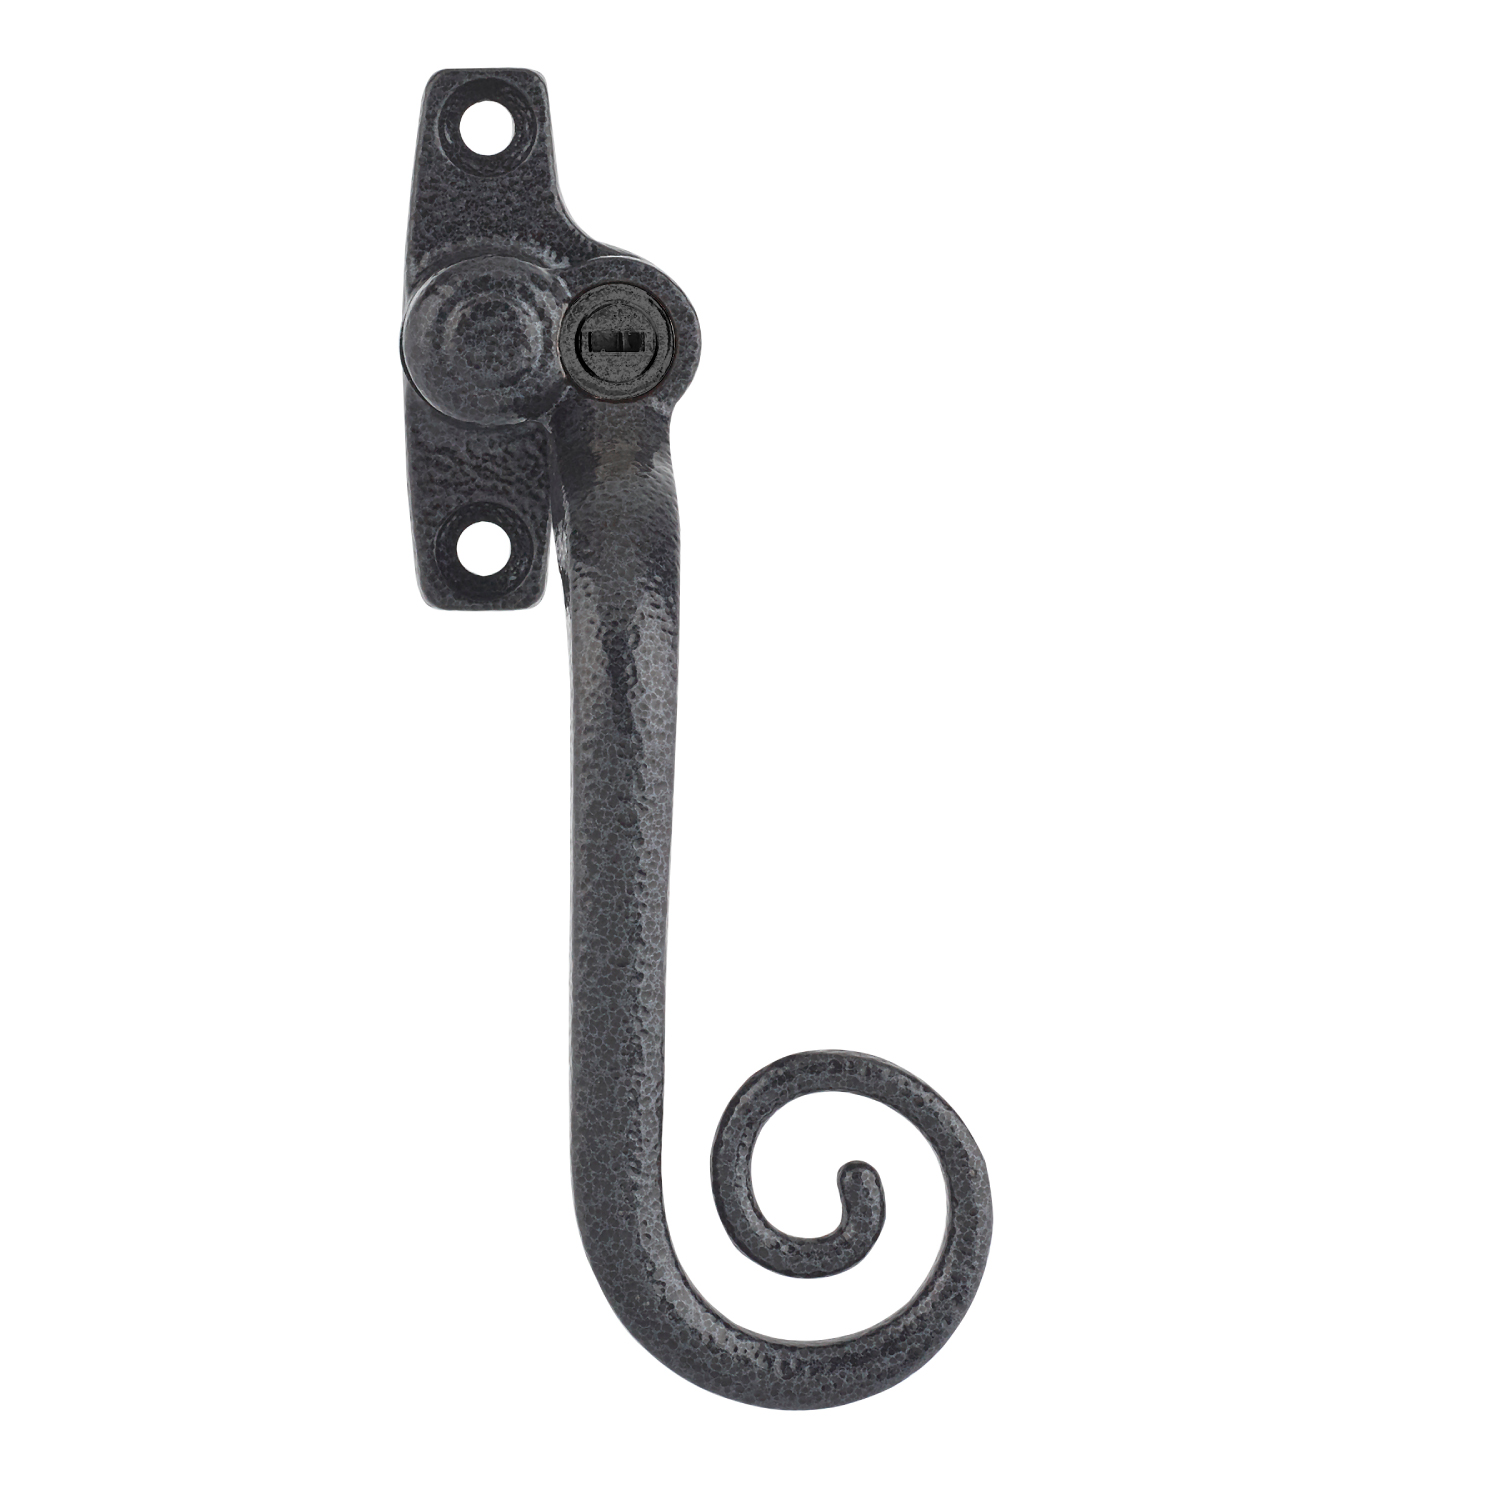 Monkey Tail Key Locking Window Handle Right Hand